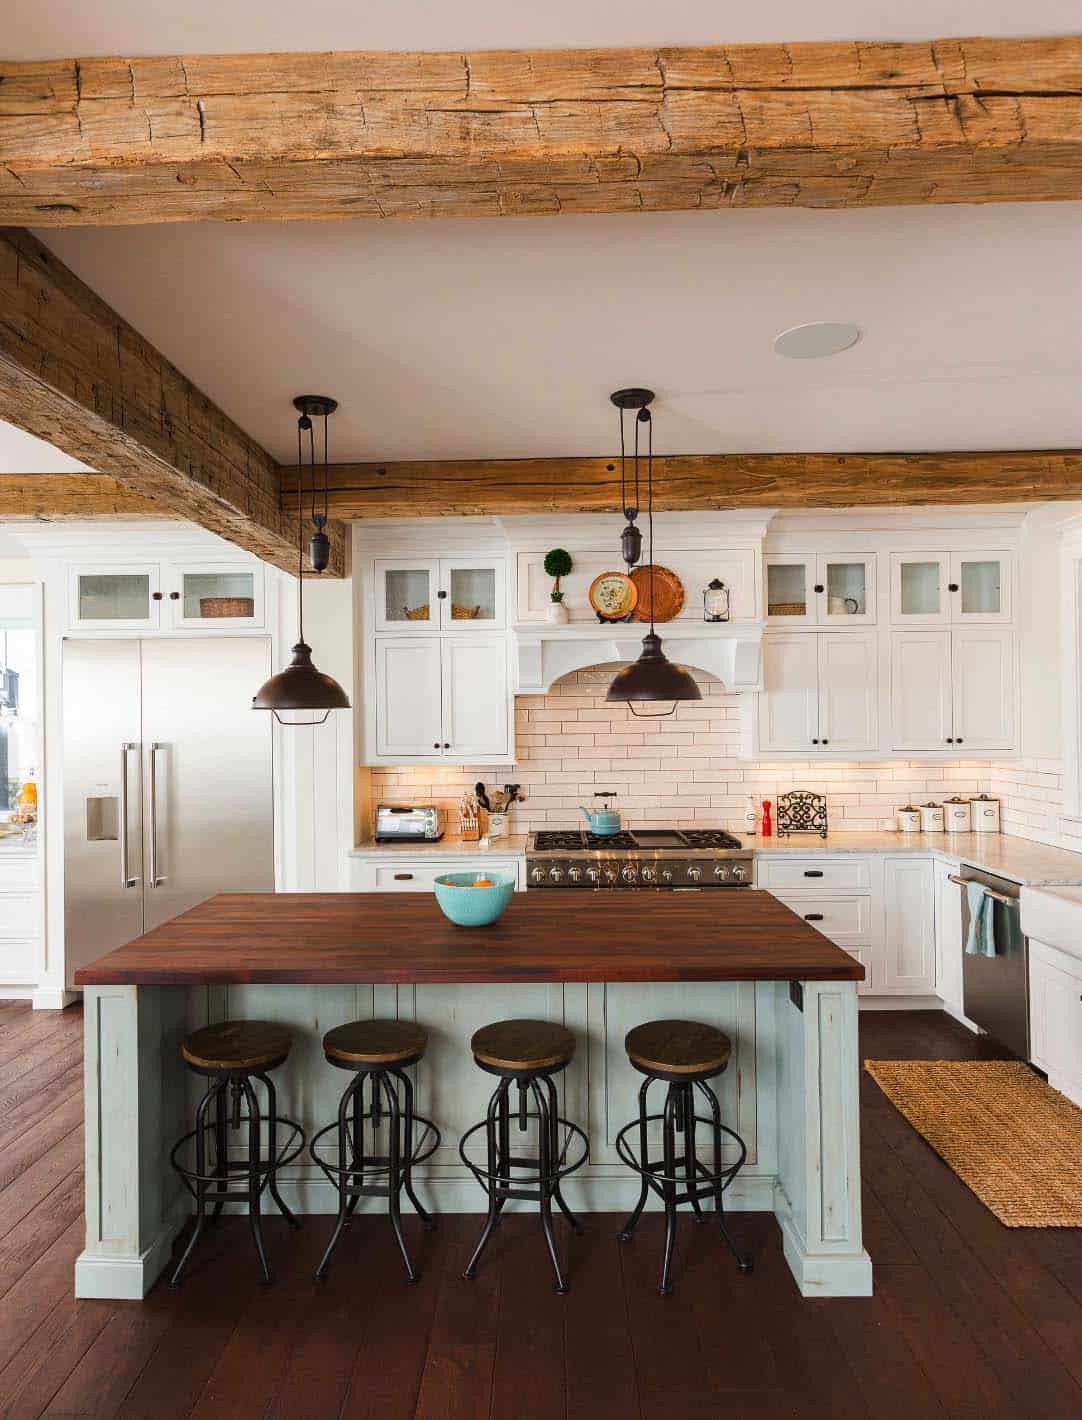 Best ideas about Farmhouse Kitchen Ideas
. Save or Pin 35 Amazingly creative and stylish farmhouse kitchen ideas Now.